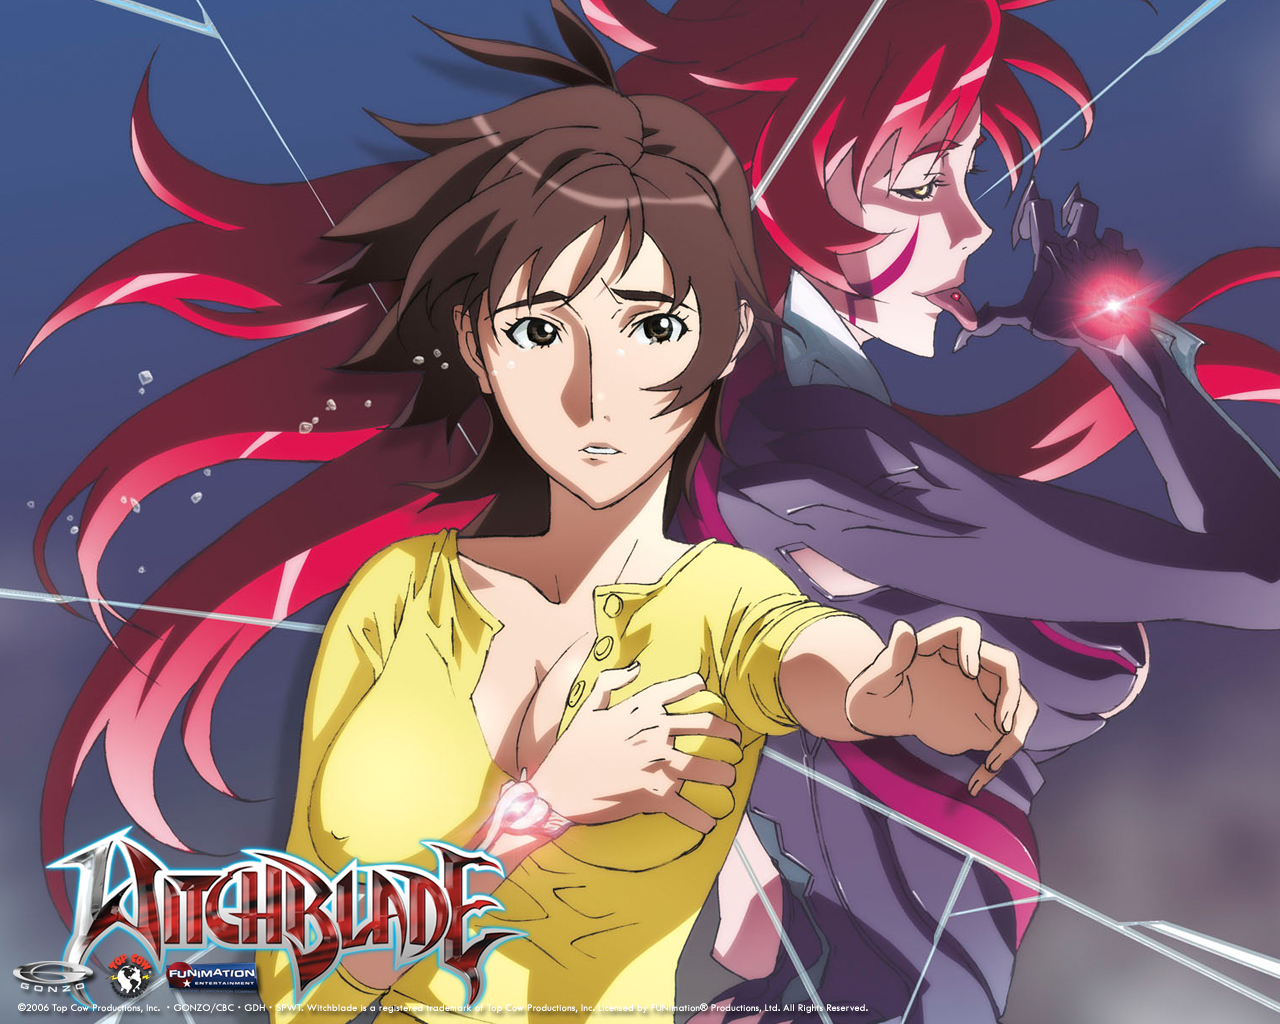 WitchBlade   Witchblade [Anime] Photo 30295139 1280x1024